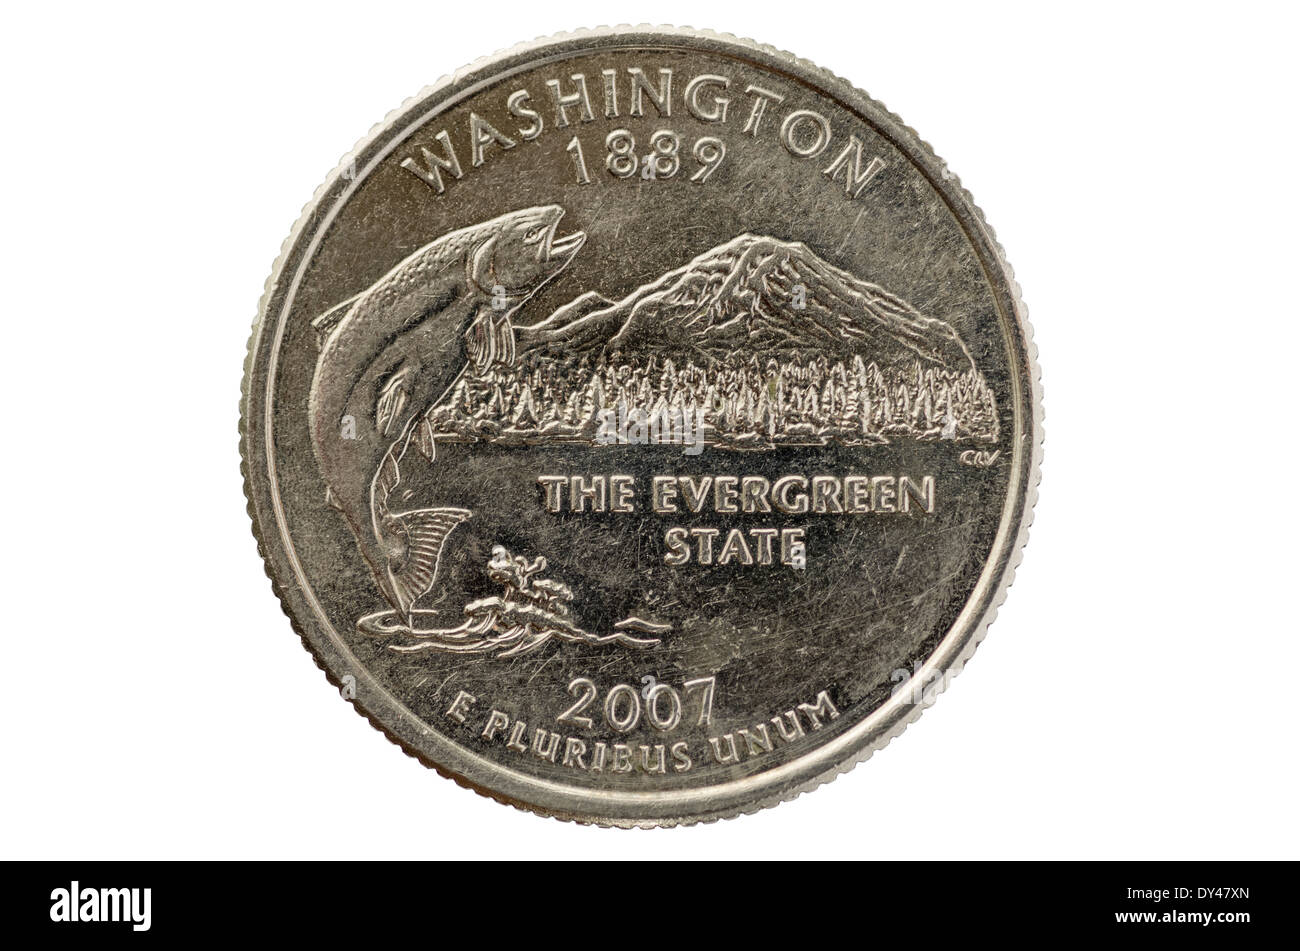 Washington state commemorative quarter coin isolated on white background Stock Photo